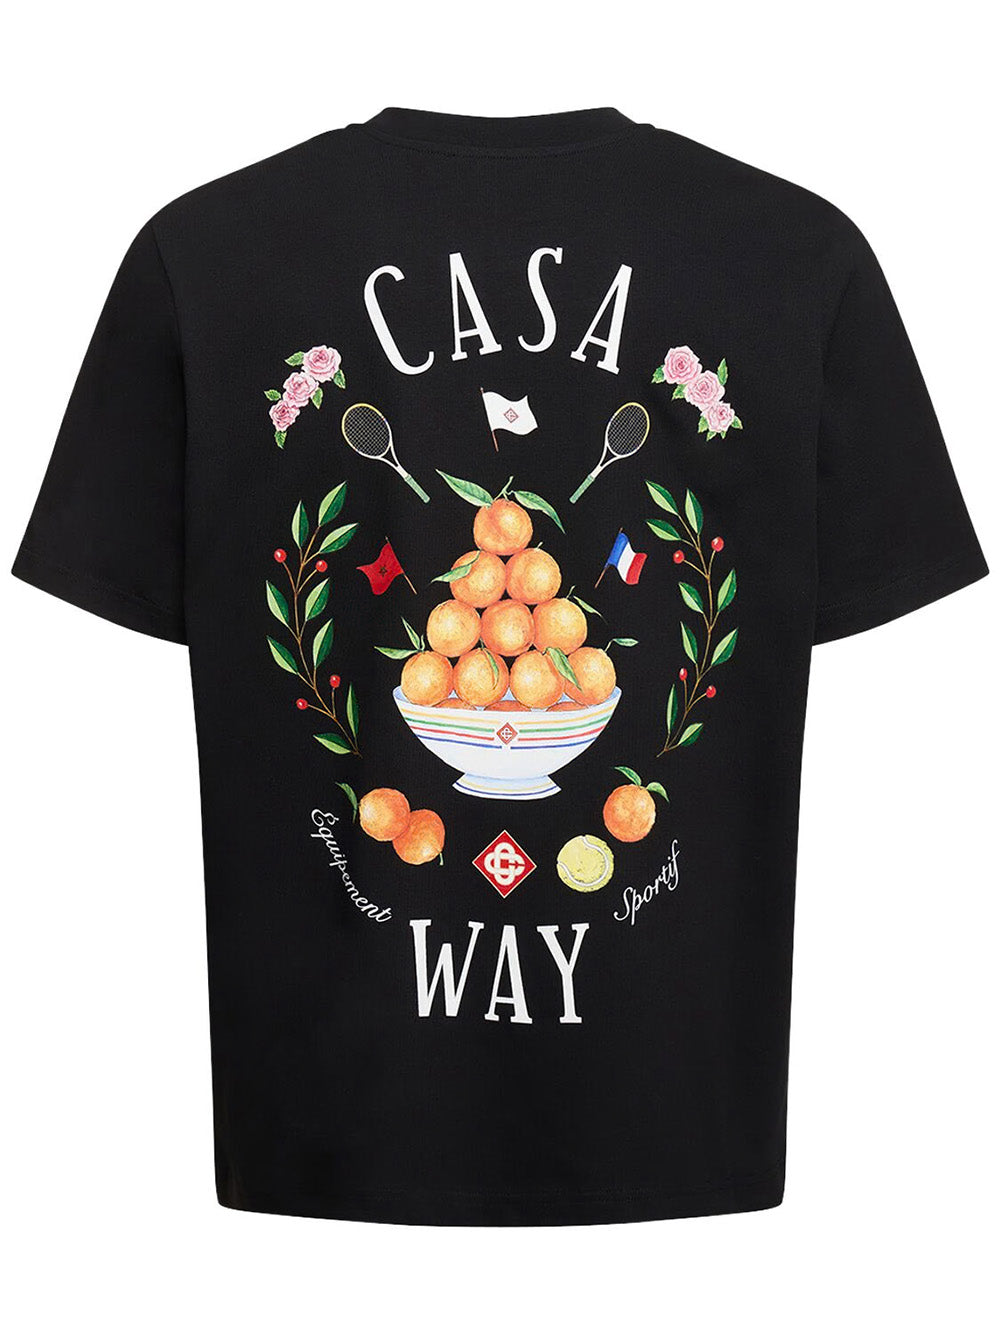 Casablanca Casa Way Bowl of Oranges T-Shirt in Black